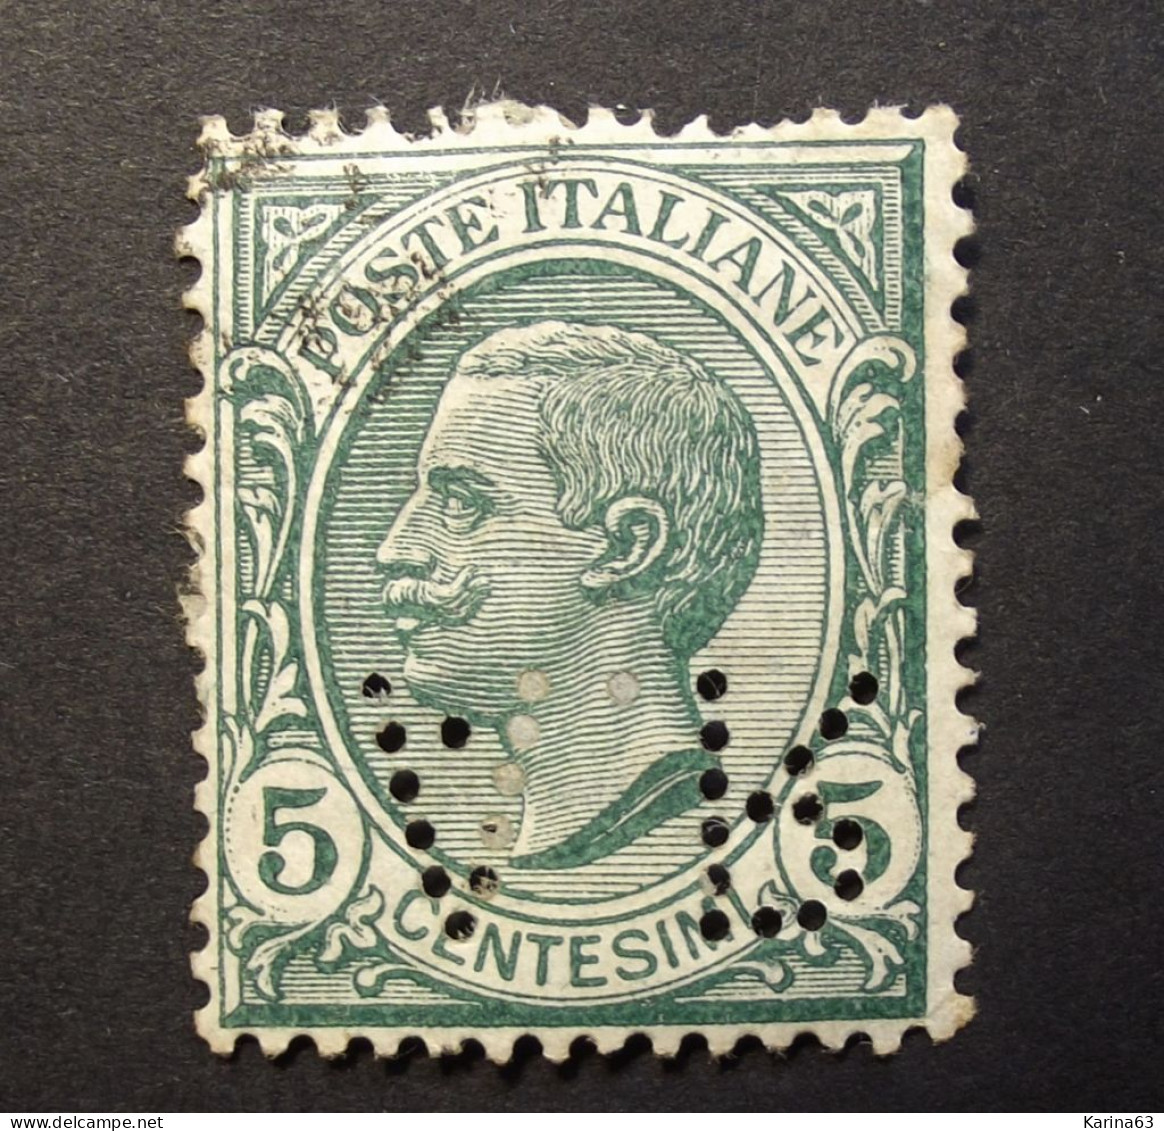 Italia - Italy - 1906 -  Perfin - Lochung -  A R -  A.Rejna - Milano  -  Cancelled - Oblitérés